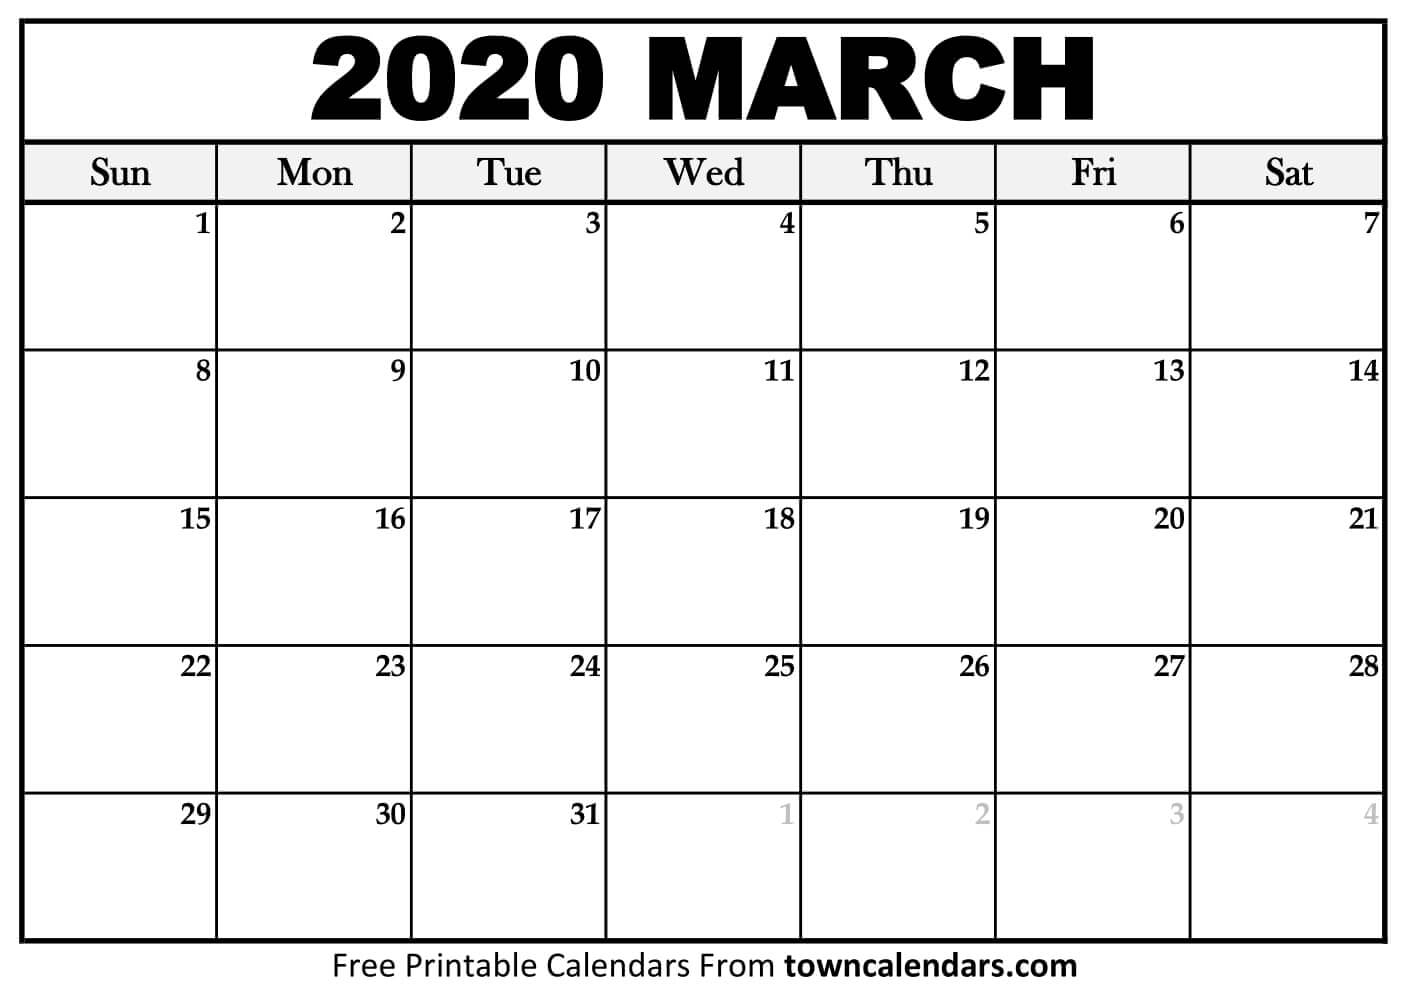 Printable March 2020 Calendar - Towncalendars